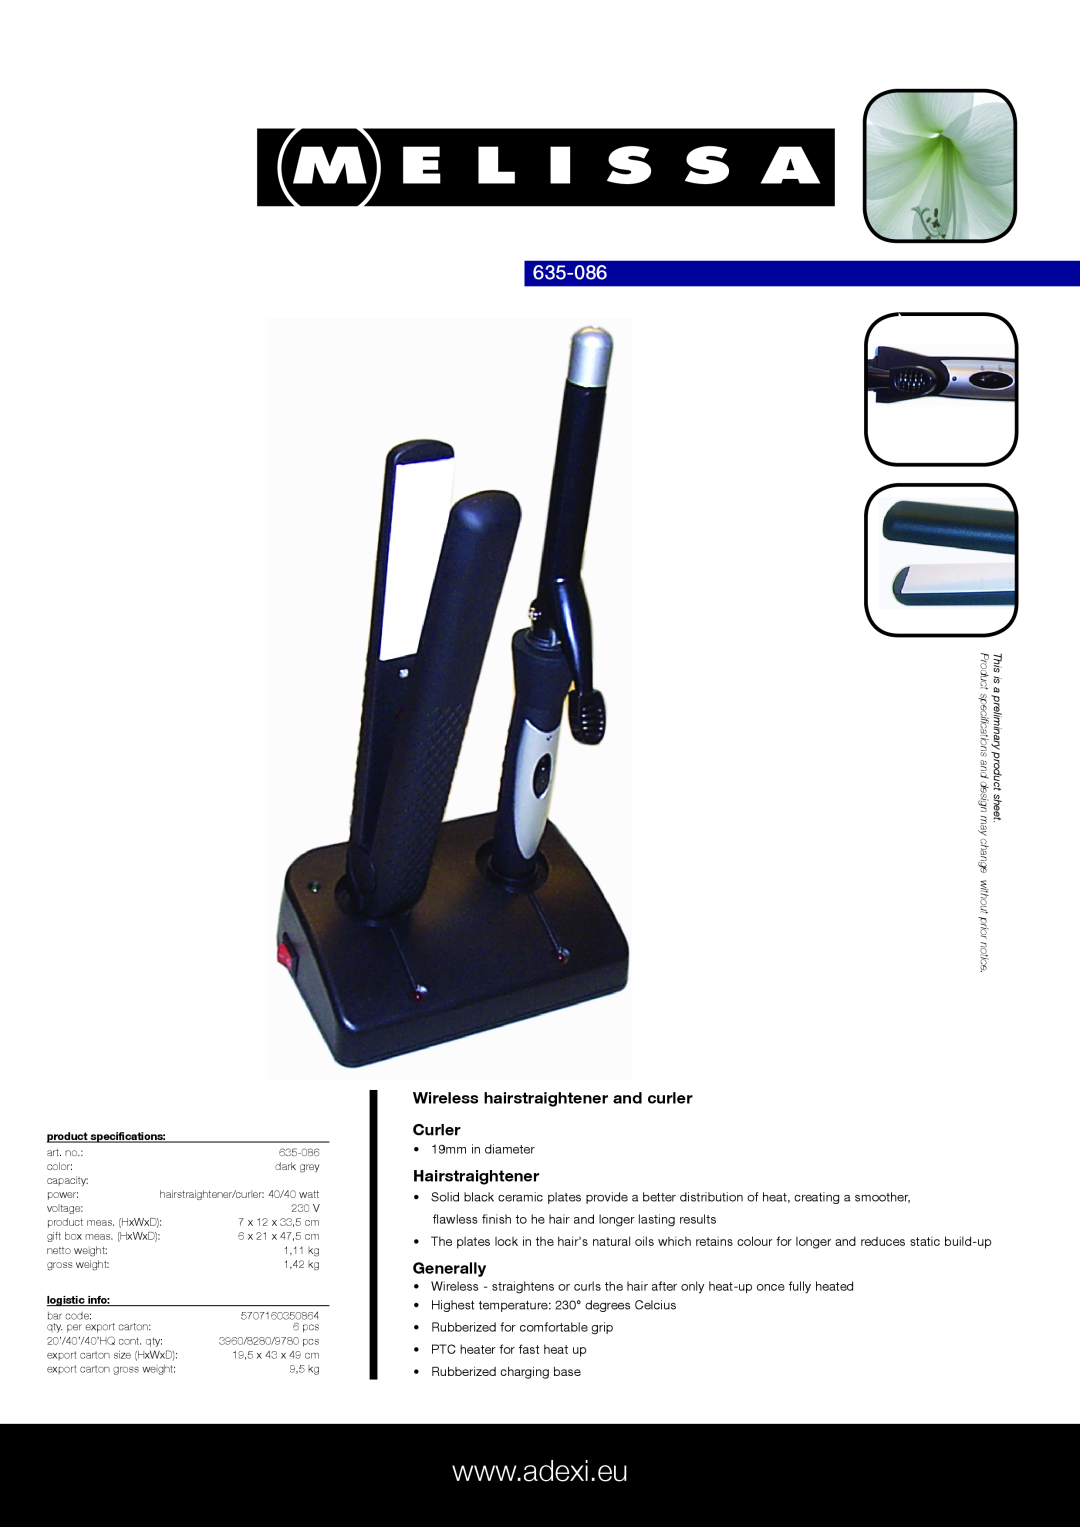 Melissa 635-086 specifications Wireless hairstraightener and curler Curler, Hairstraightener, Generally 